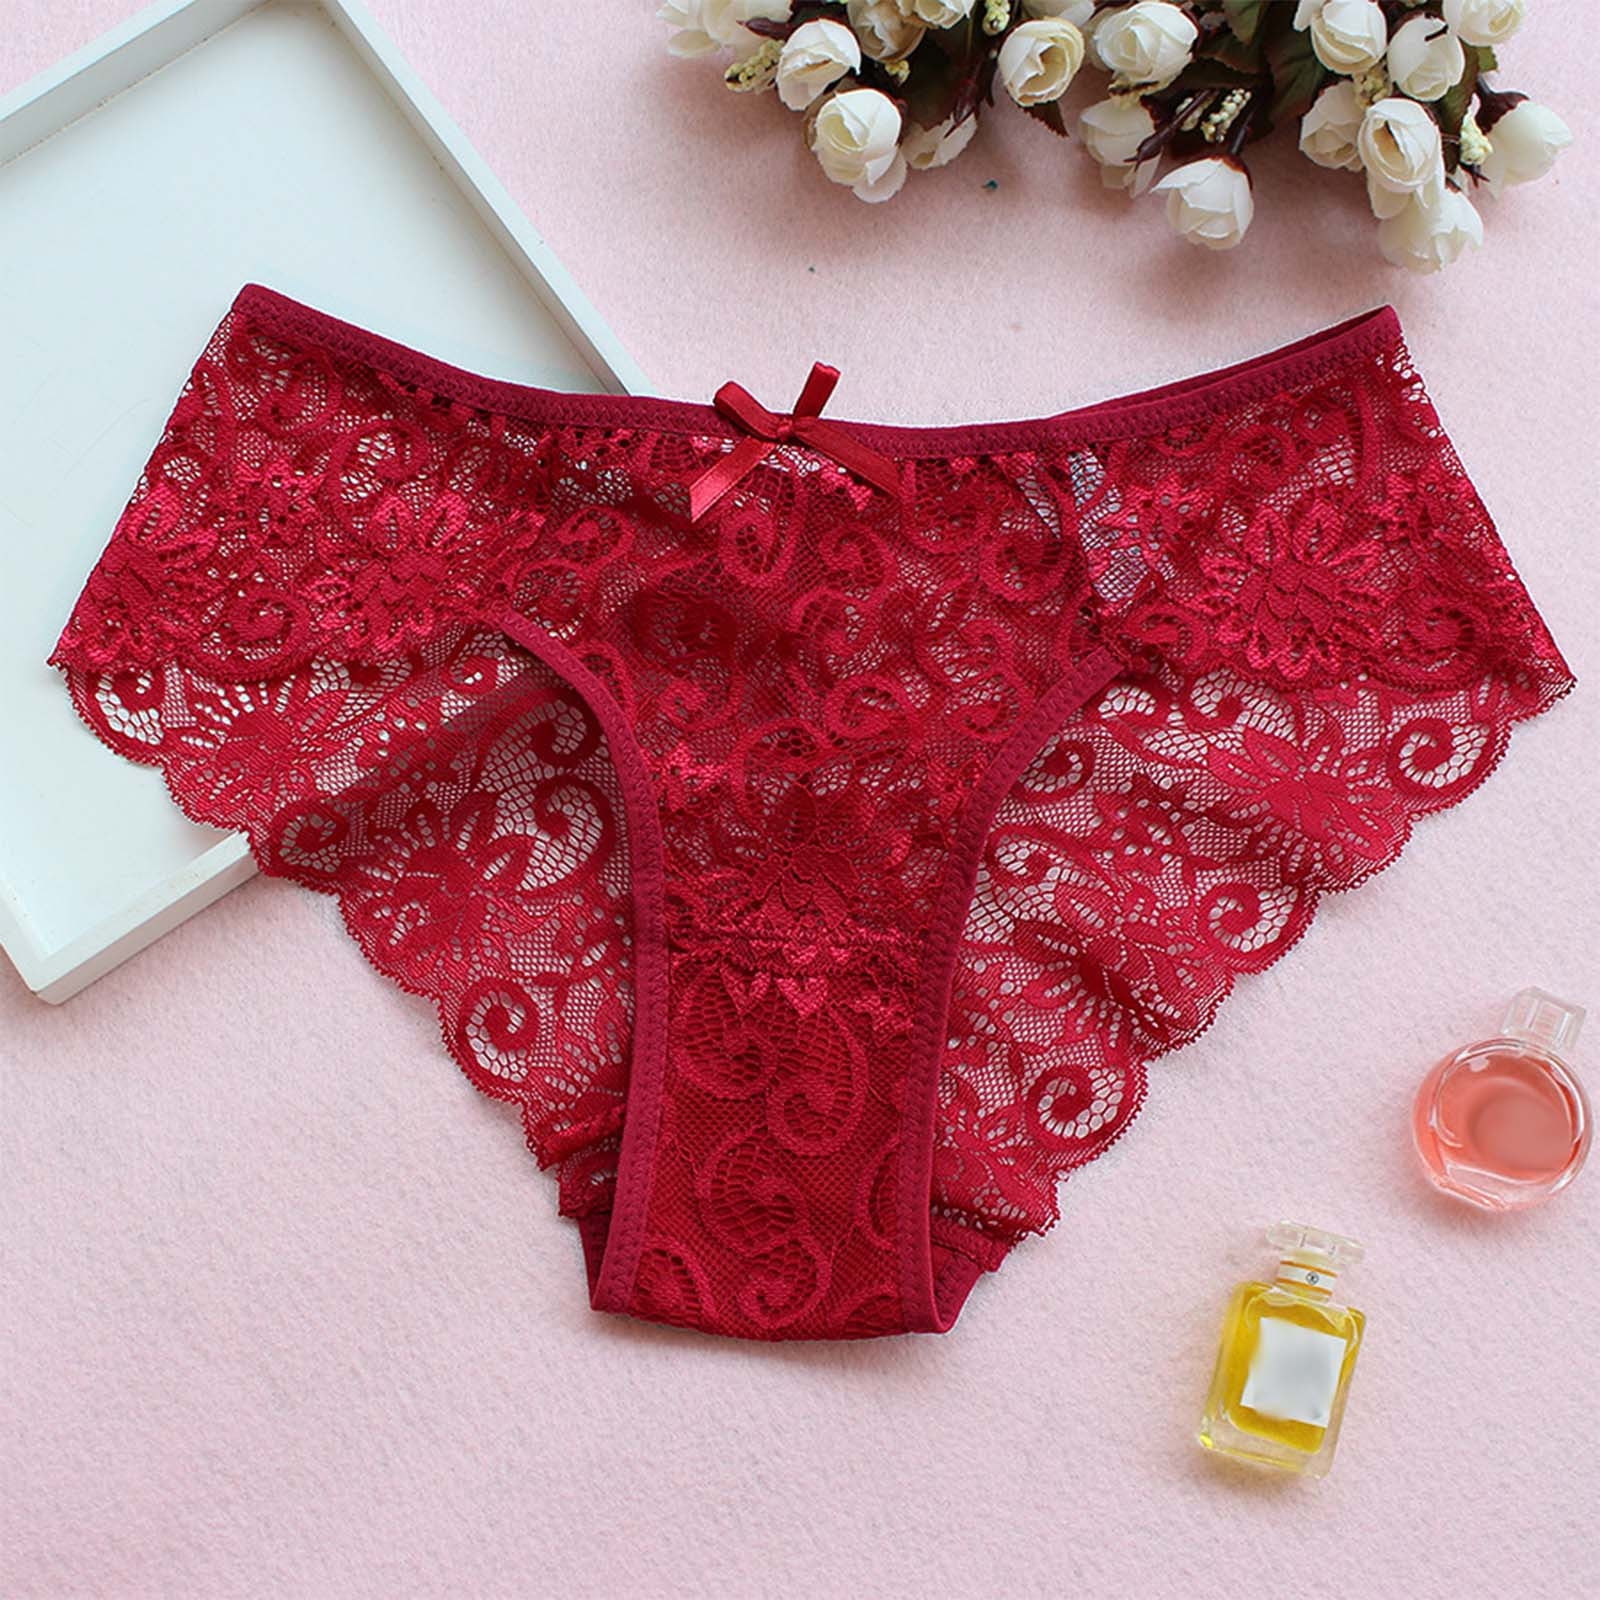 Winter Savings Clearance! Suokom Women Lace Underwear Lingerie Thongs  Panties Ladies Underwear Underpants Gifts for Women 